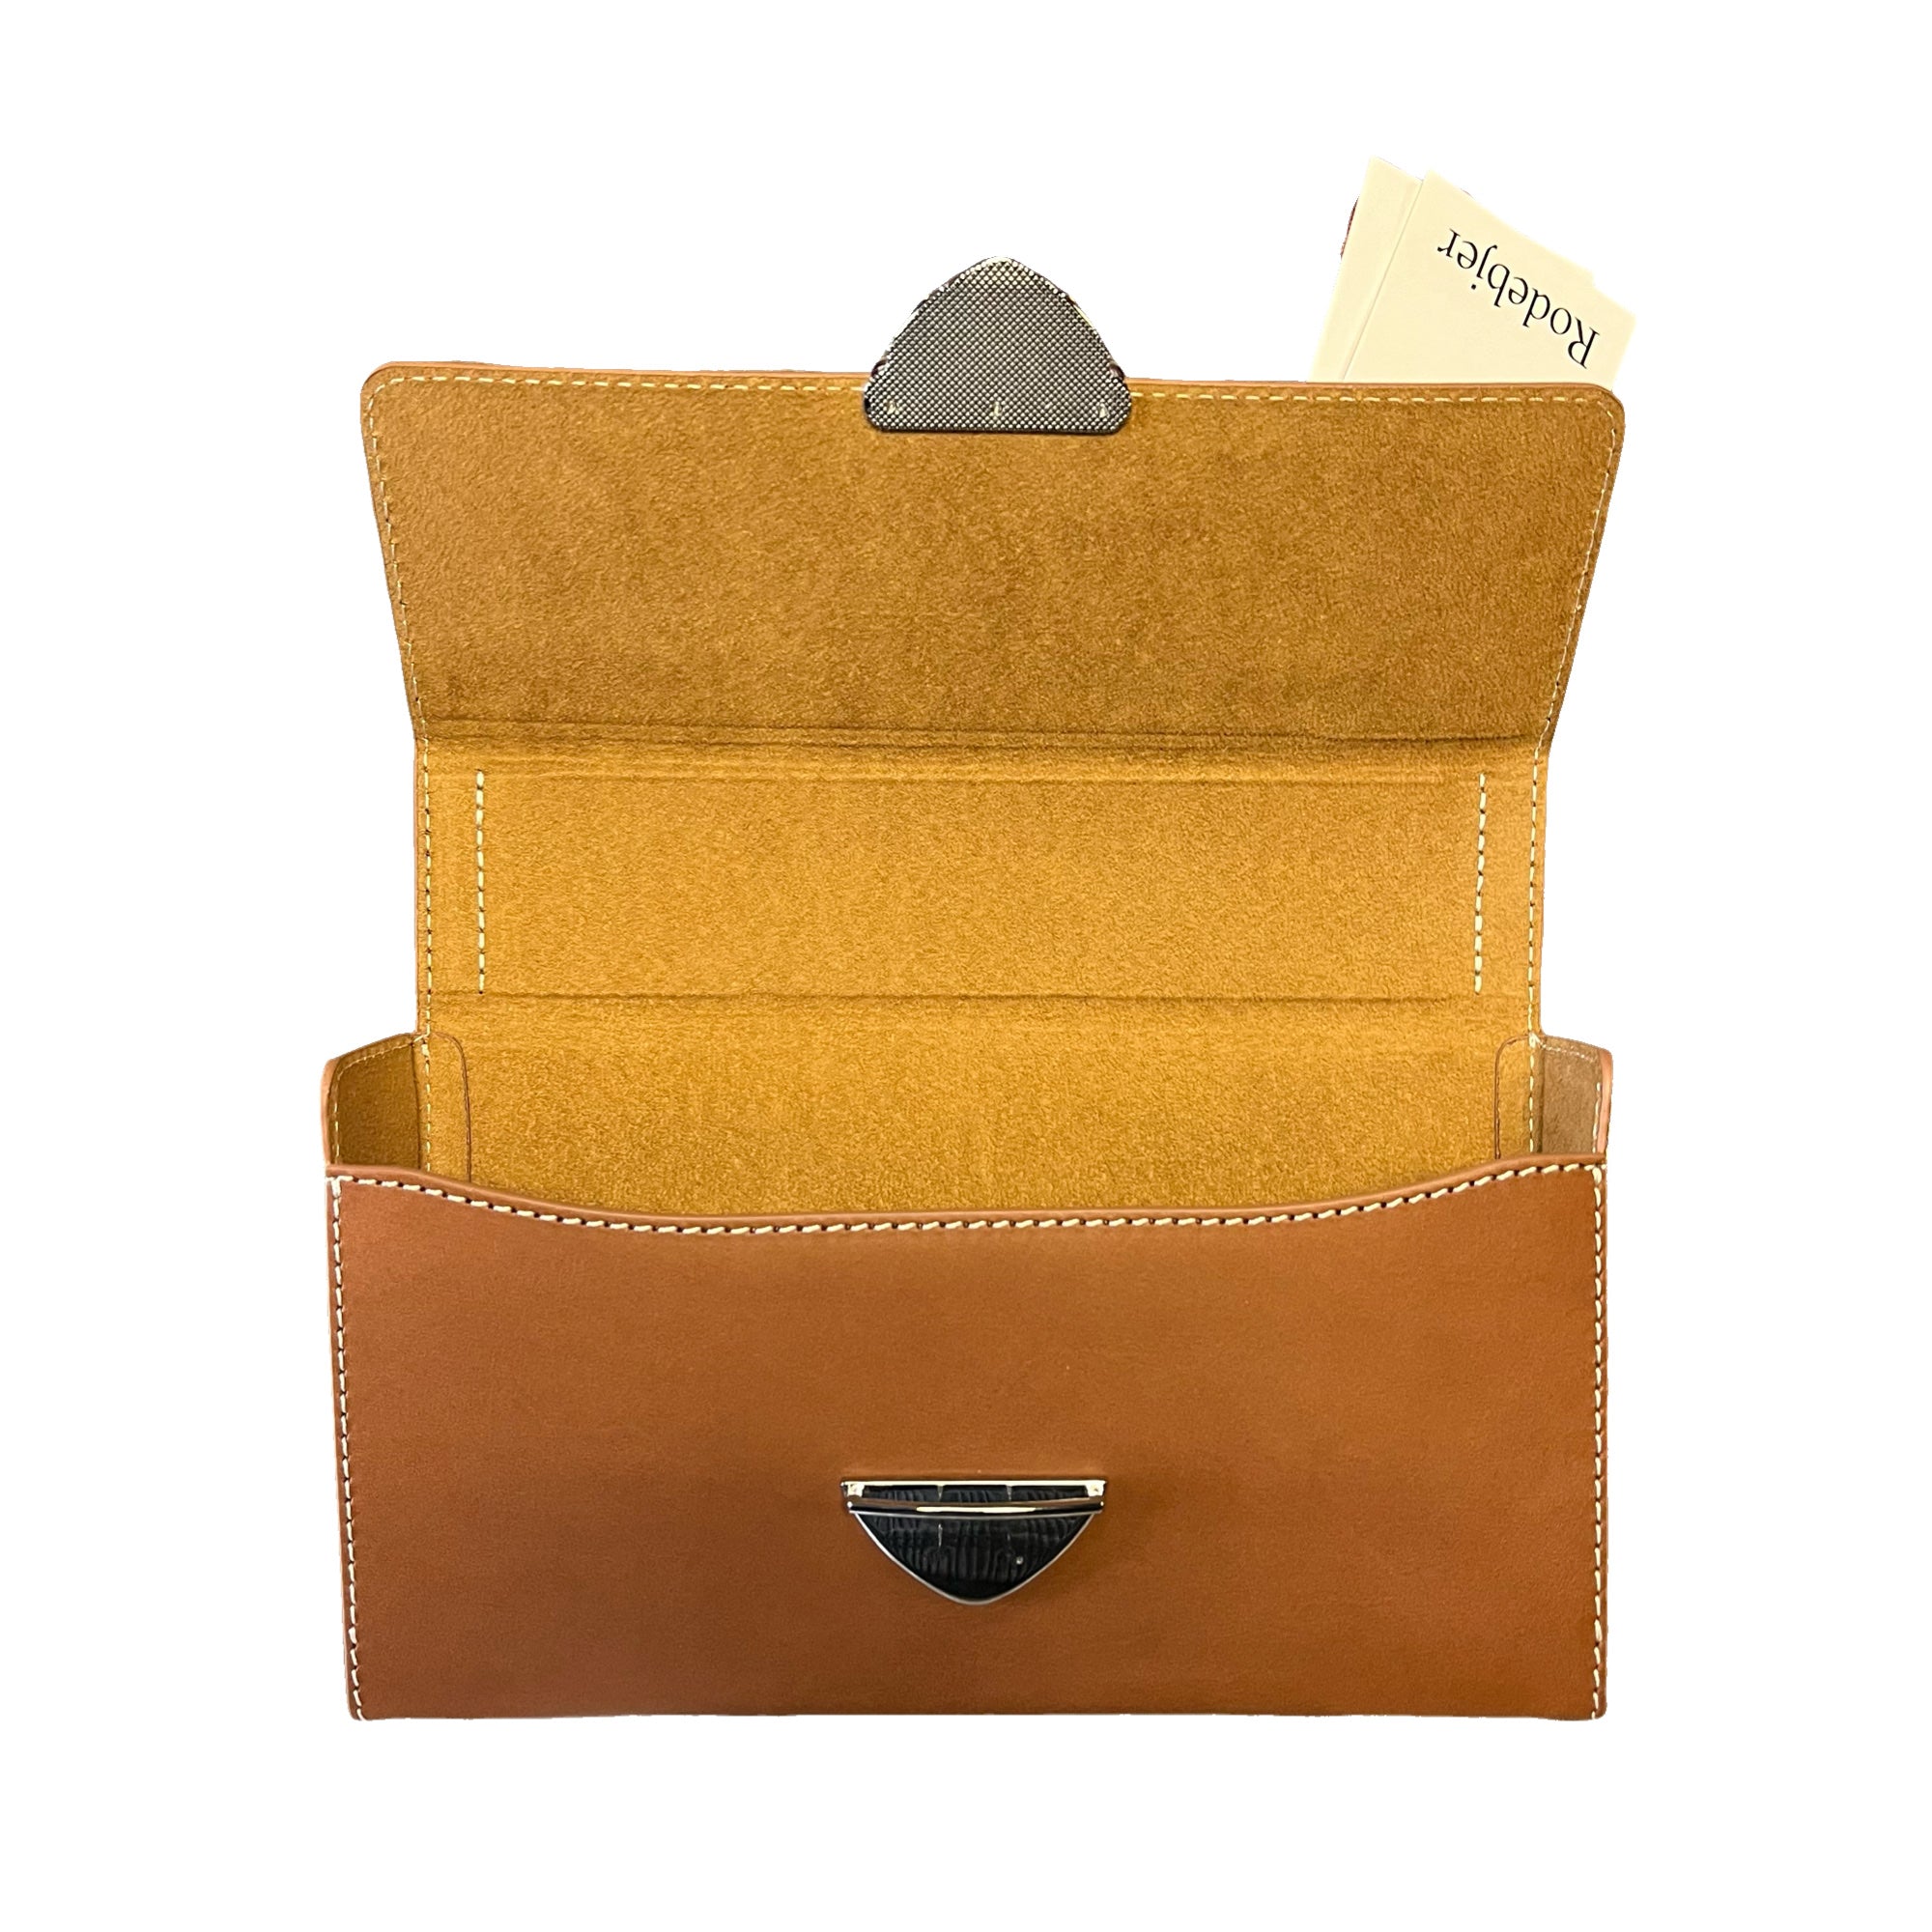 Rodebjer Brown Box Bag